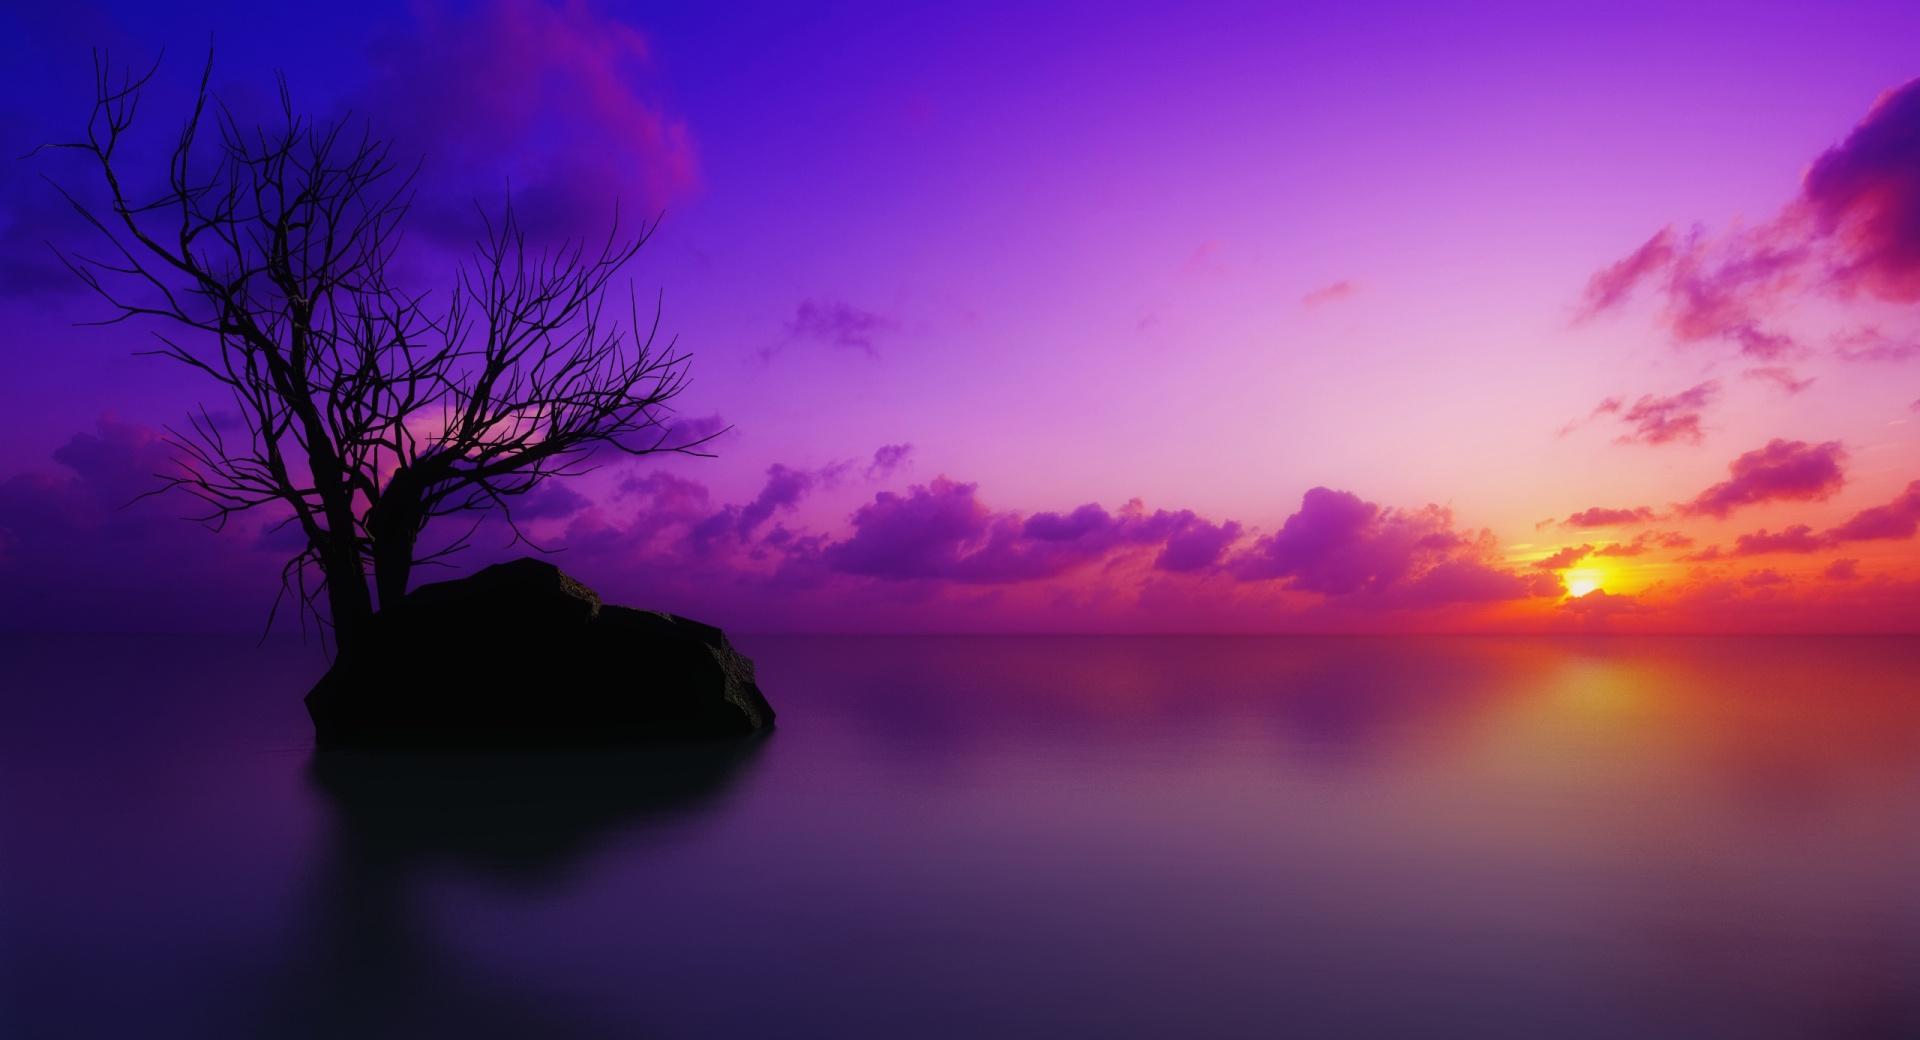 Maldivian Sunset at 1152 x 864 size wallpapers HD quality